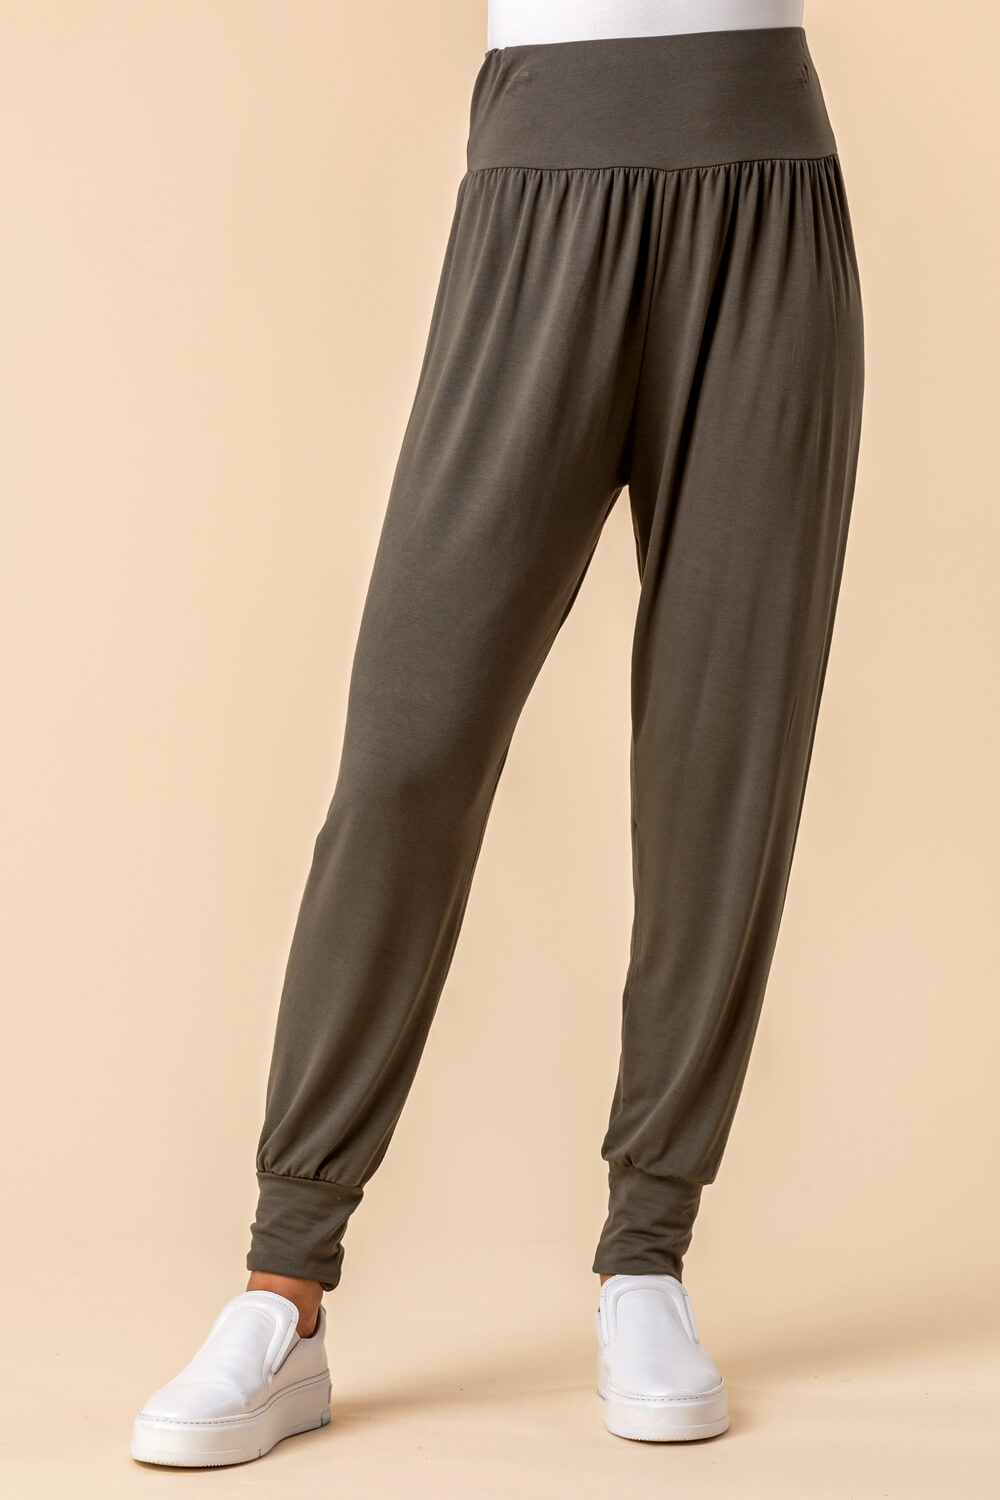 KHAKI Jersey Stretch Harem Trousers, Image 2 of 4